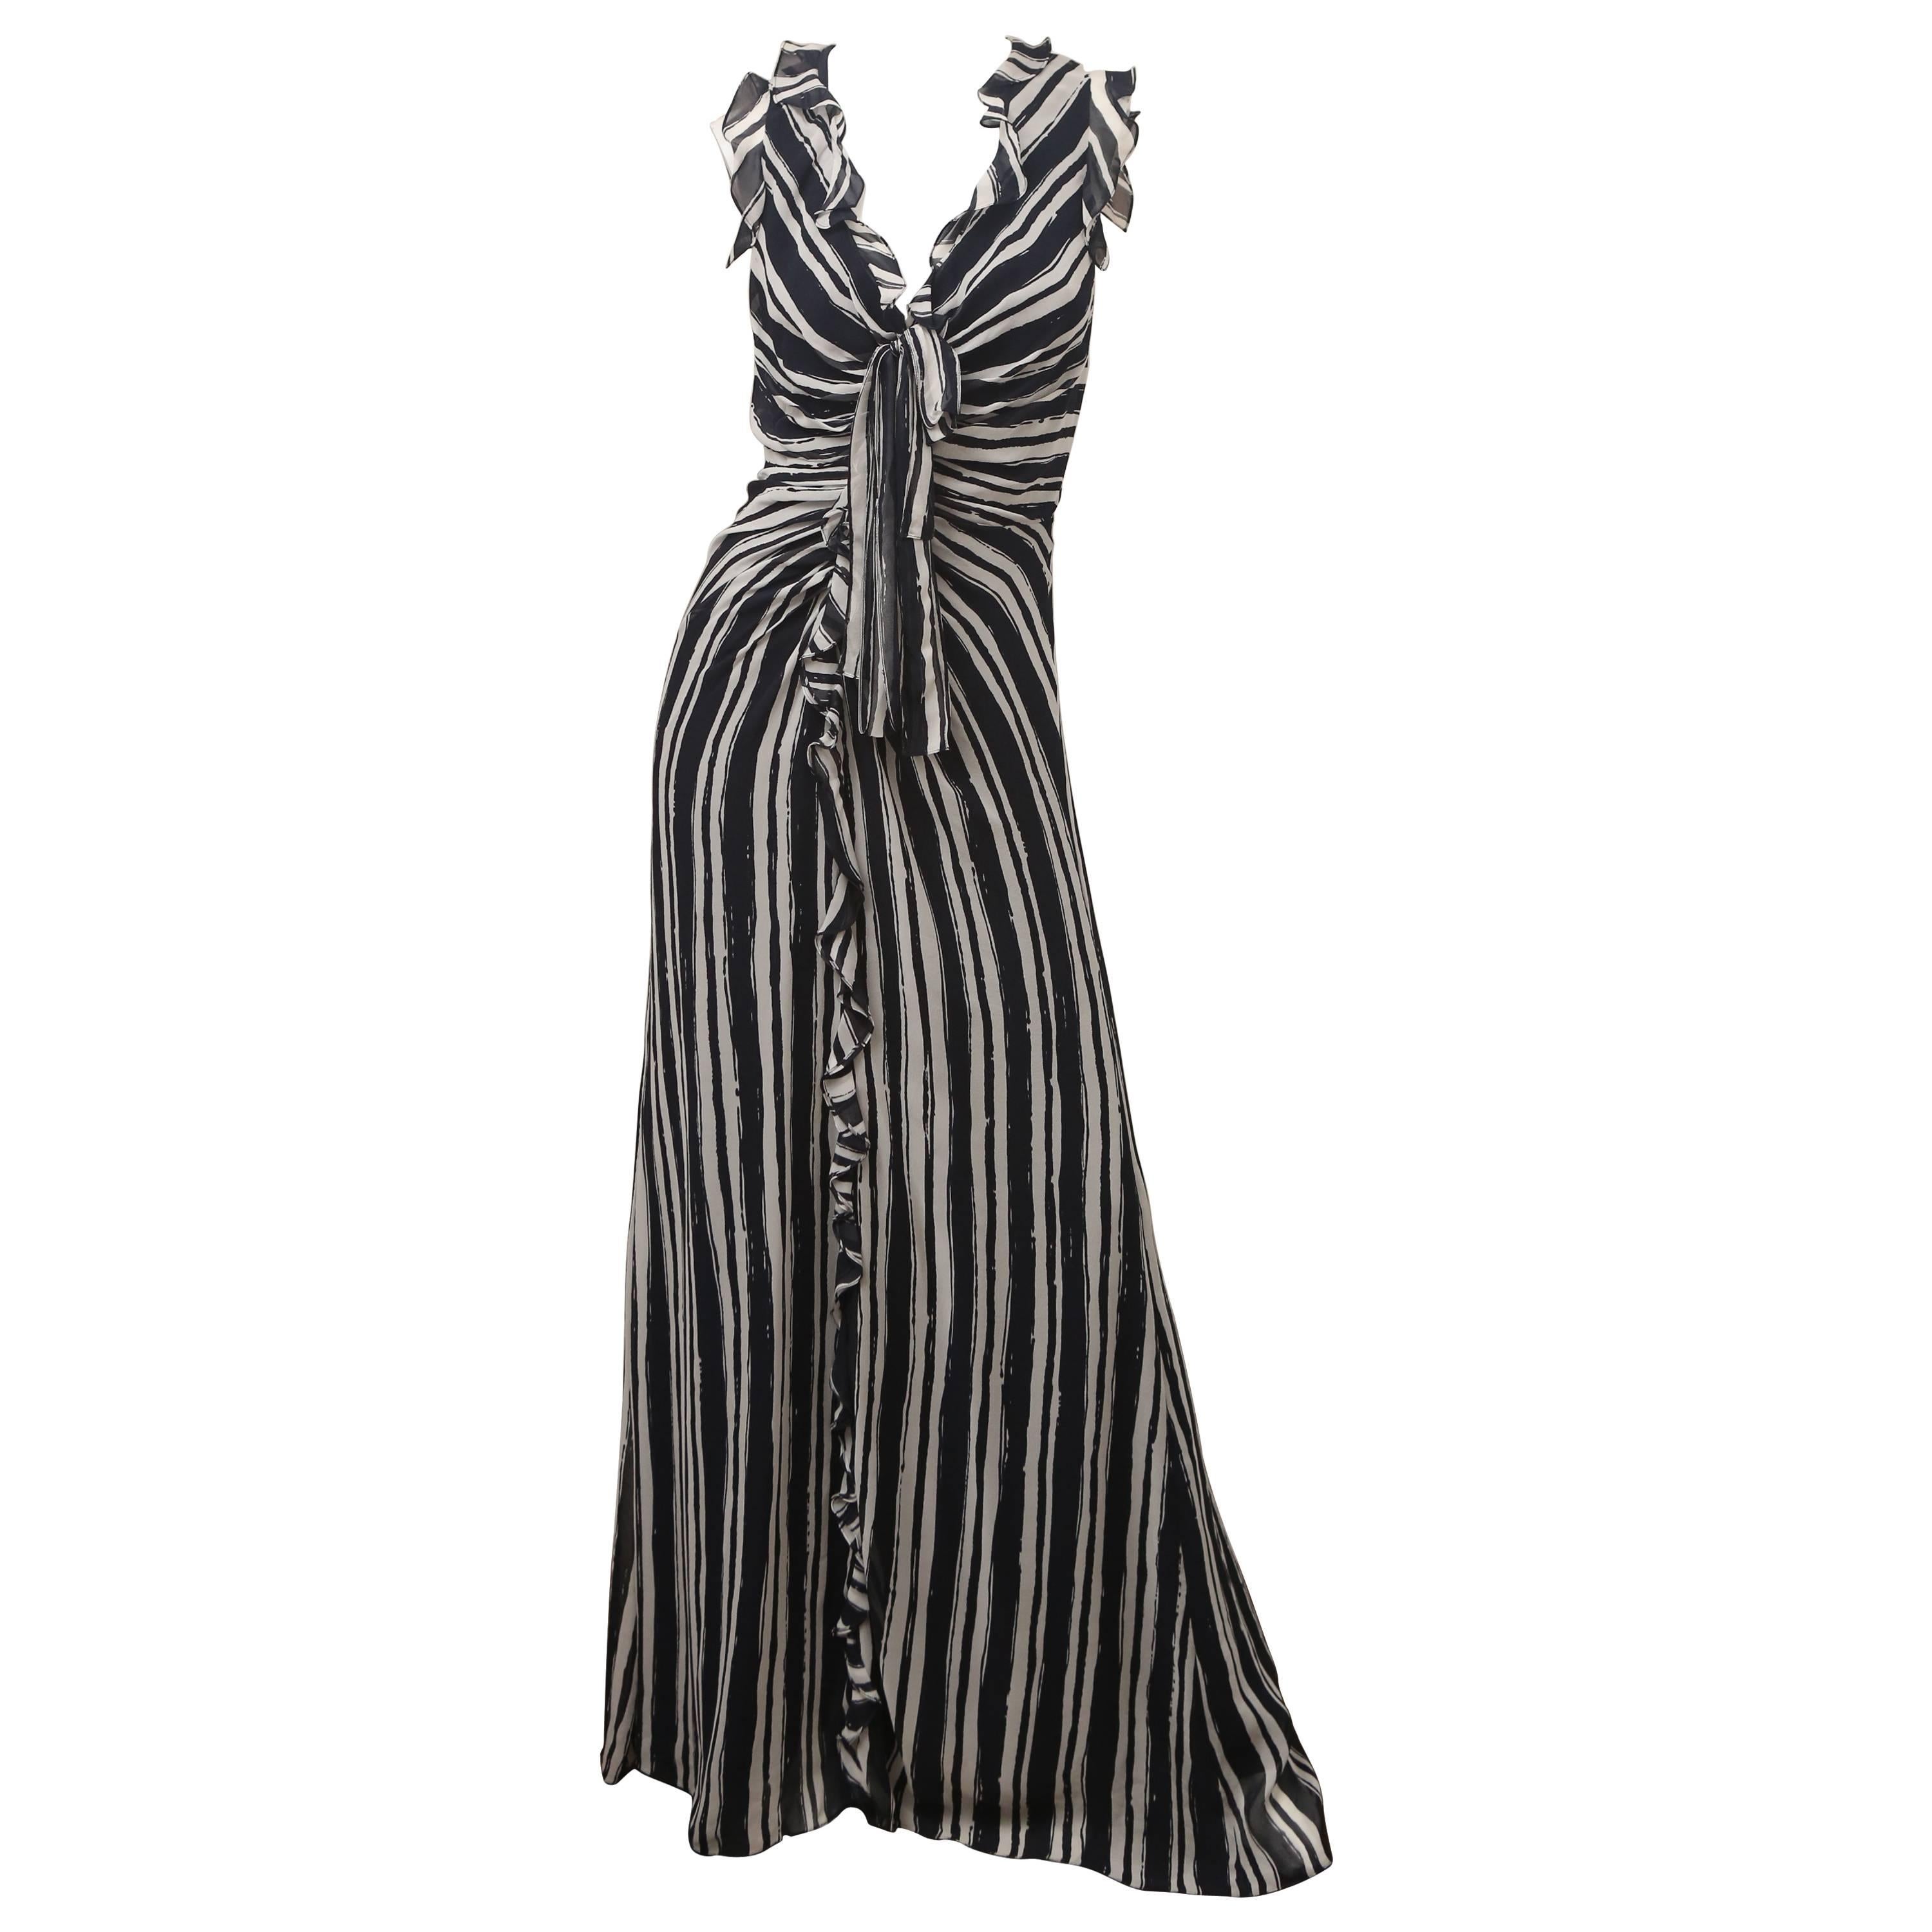 Carolina Herrera S/L Navy/Ivory Striped Gown